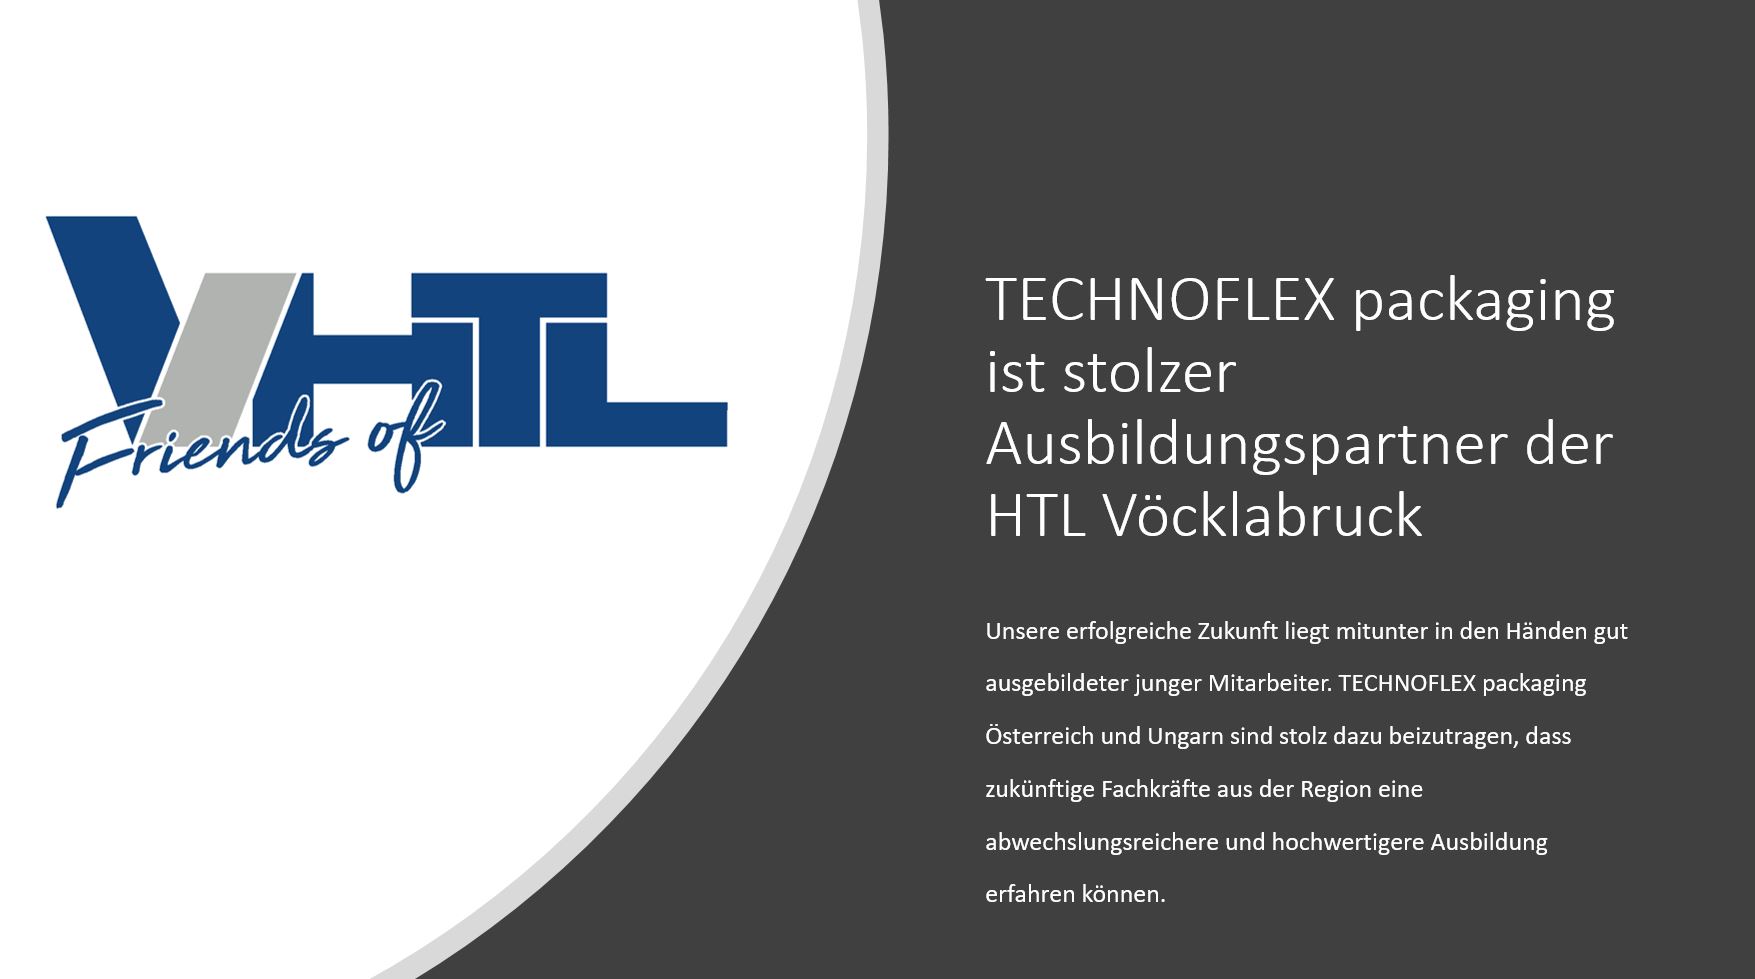 TECHNOFLEX packaging ist stolzer Ausbildungspartner der HTL Vöcklabruck 2